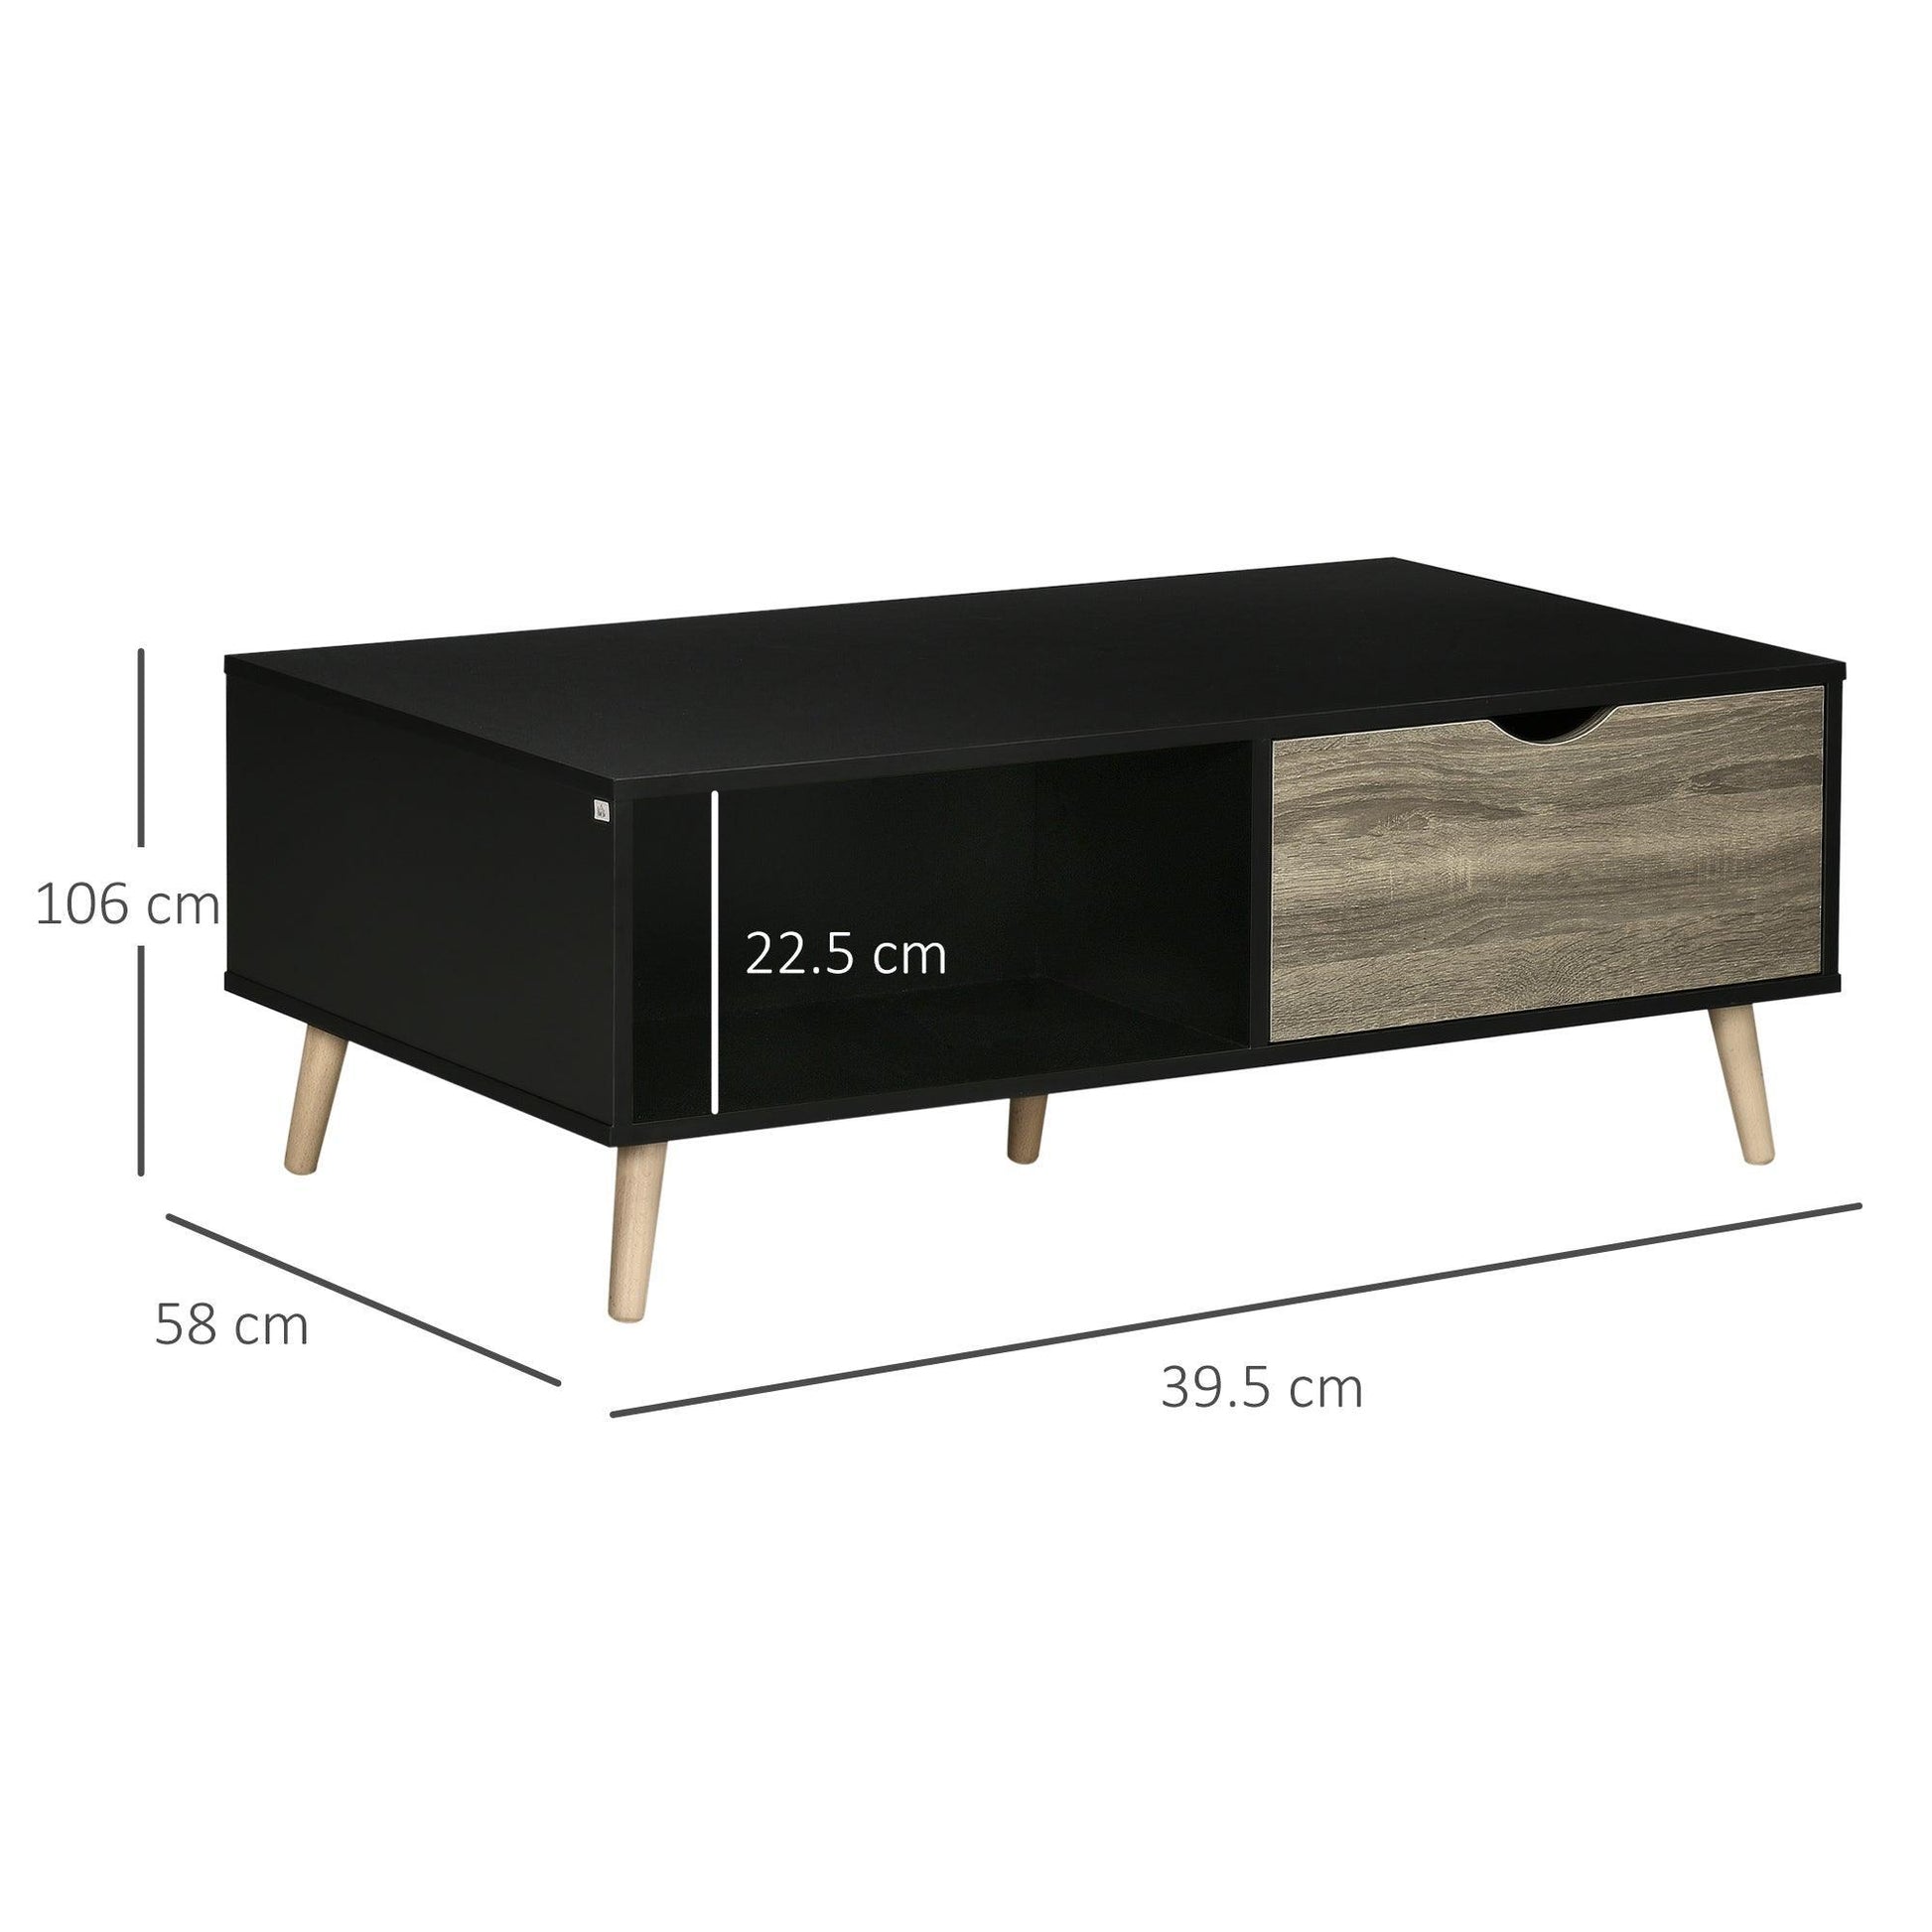 HOMCOM Modern Black Coffee Table with Storage Drawers and Wood Legs - ALL4U RETAILER LTD